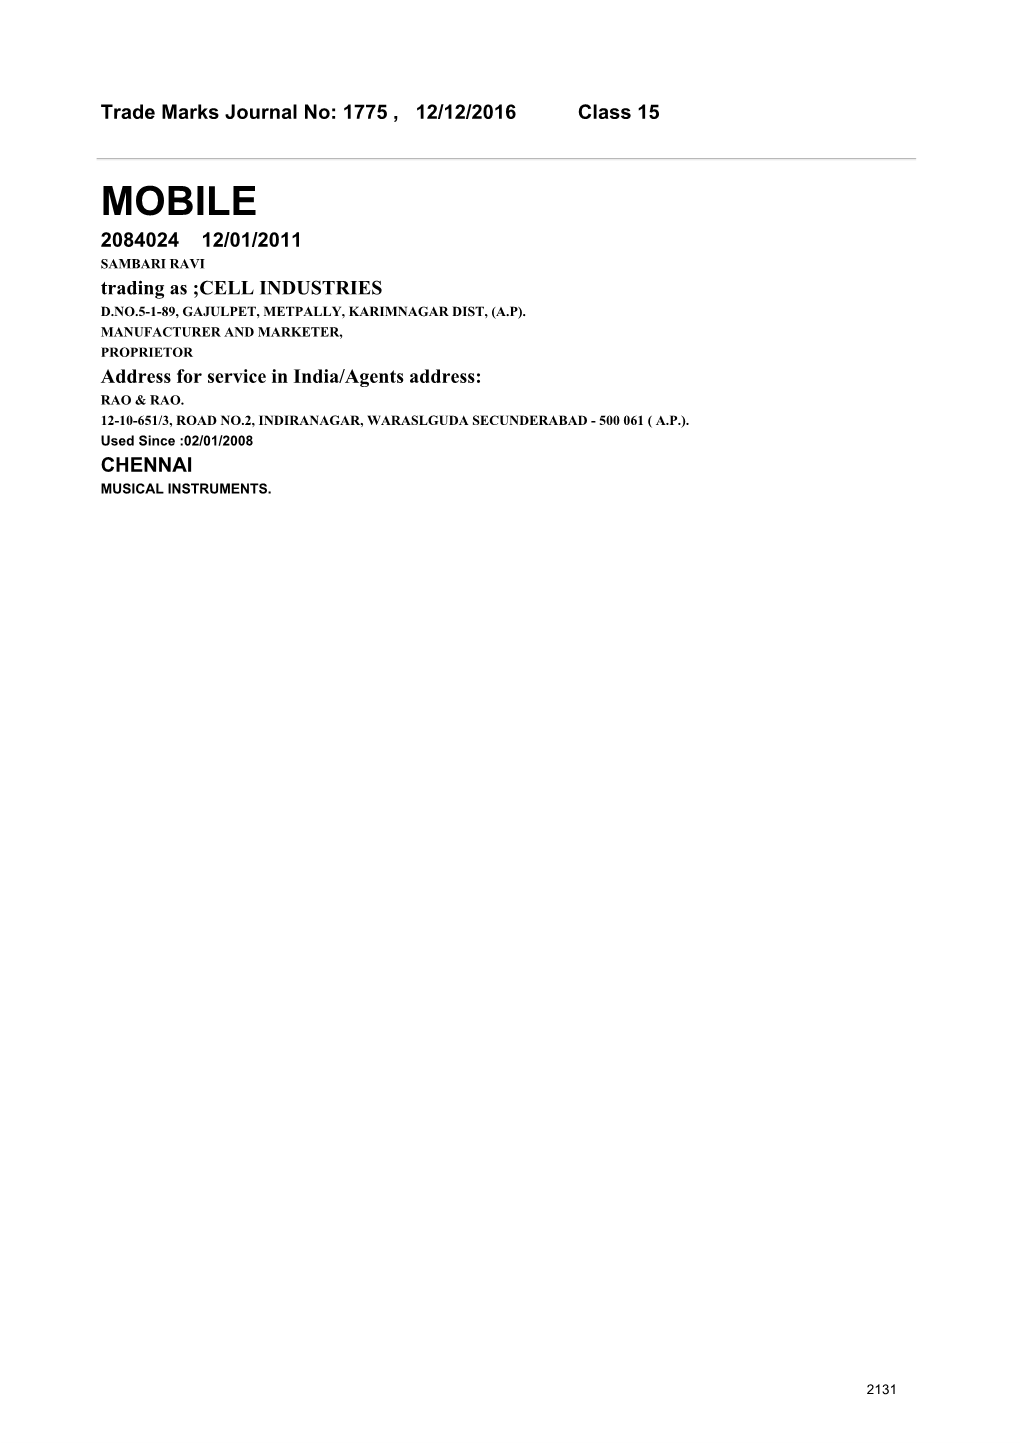 MOBILE 2084024 12/01/2011 SAMBARI RAVI Trading As ;CELL INDUSTRIES D.NO.5-1-89, GAJULPET, METPALLY, KARIMNAGAR DIST, (A.P)